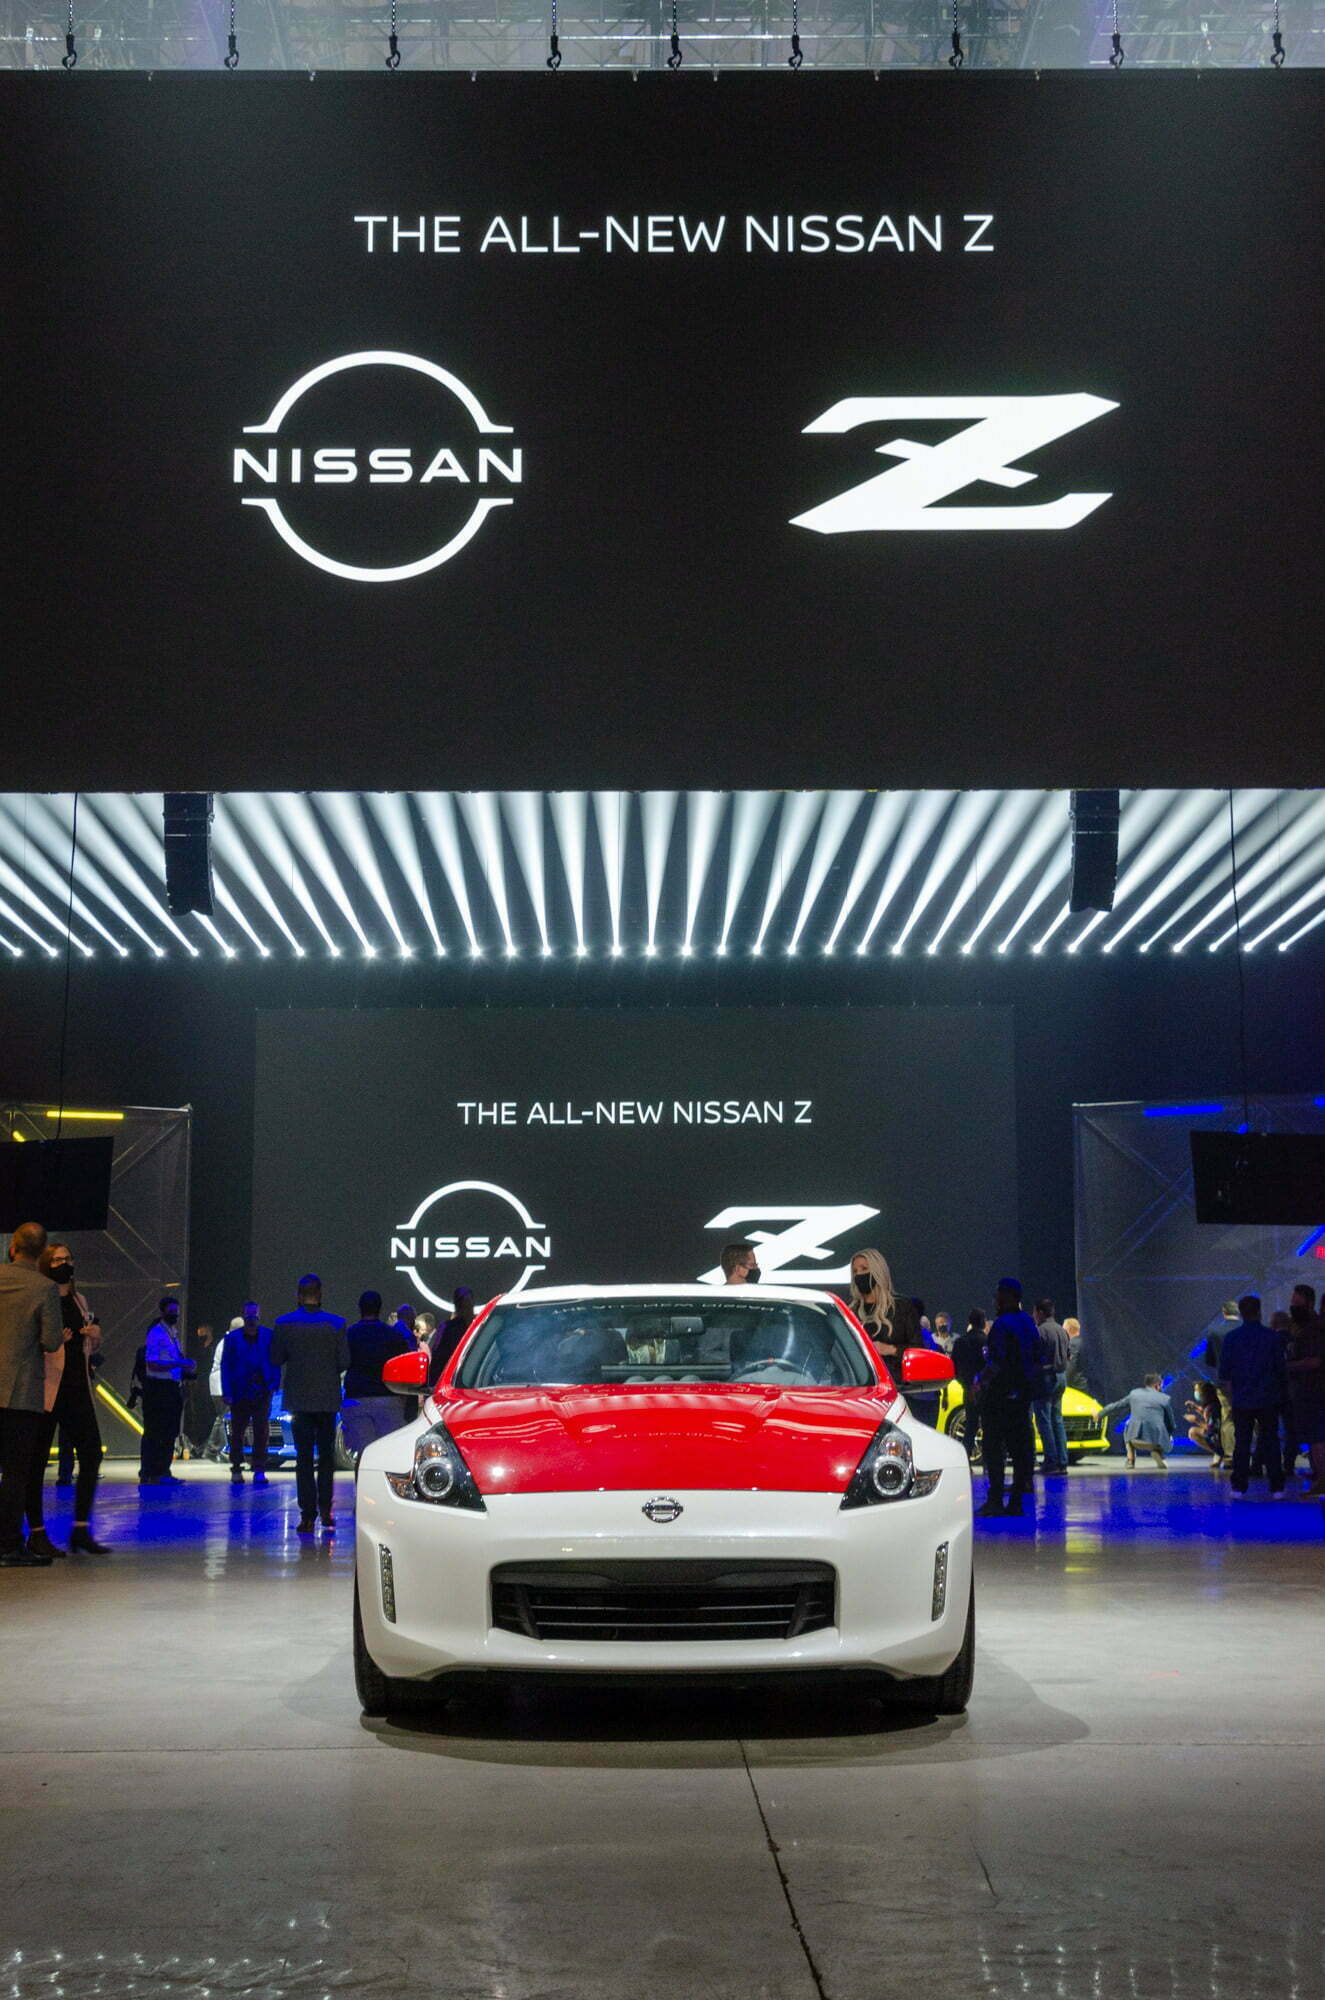 2020 370Z, Nissan Z